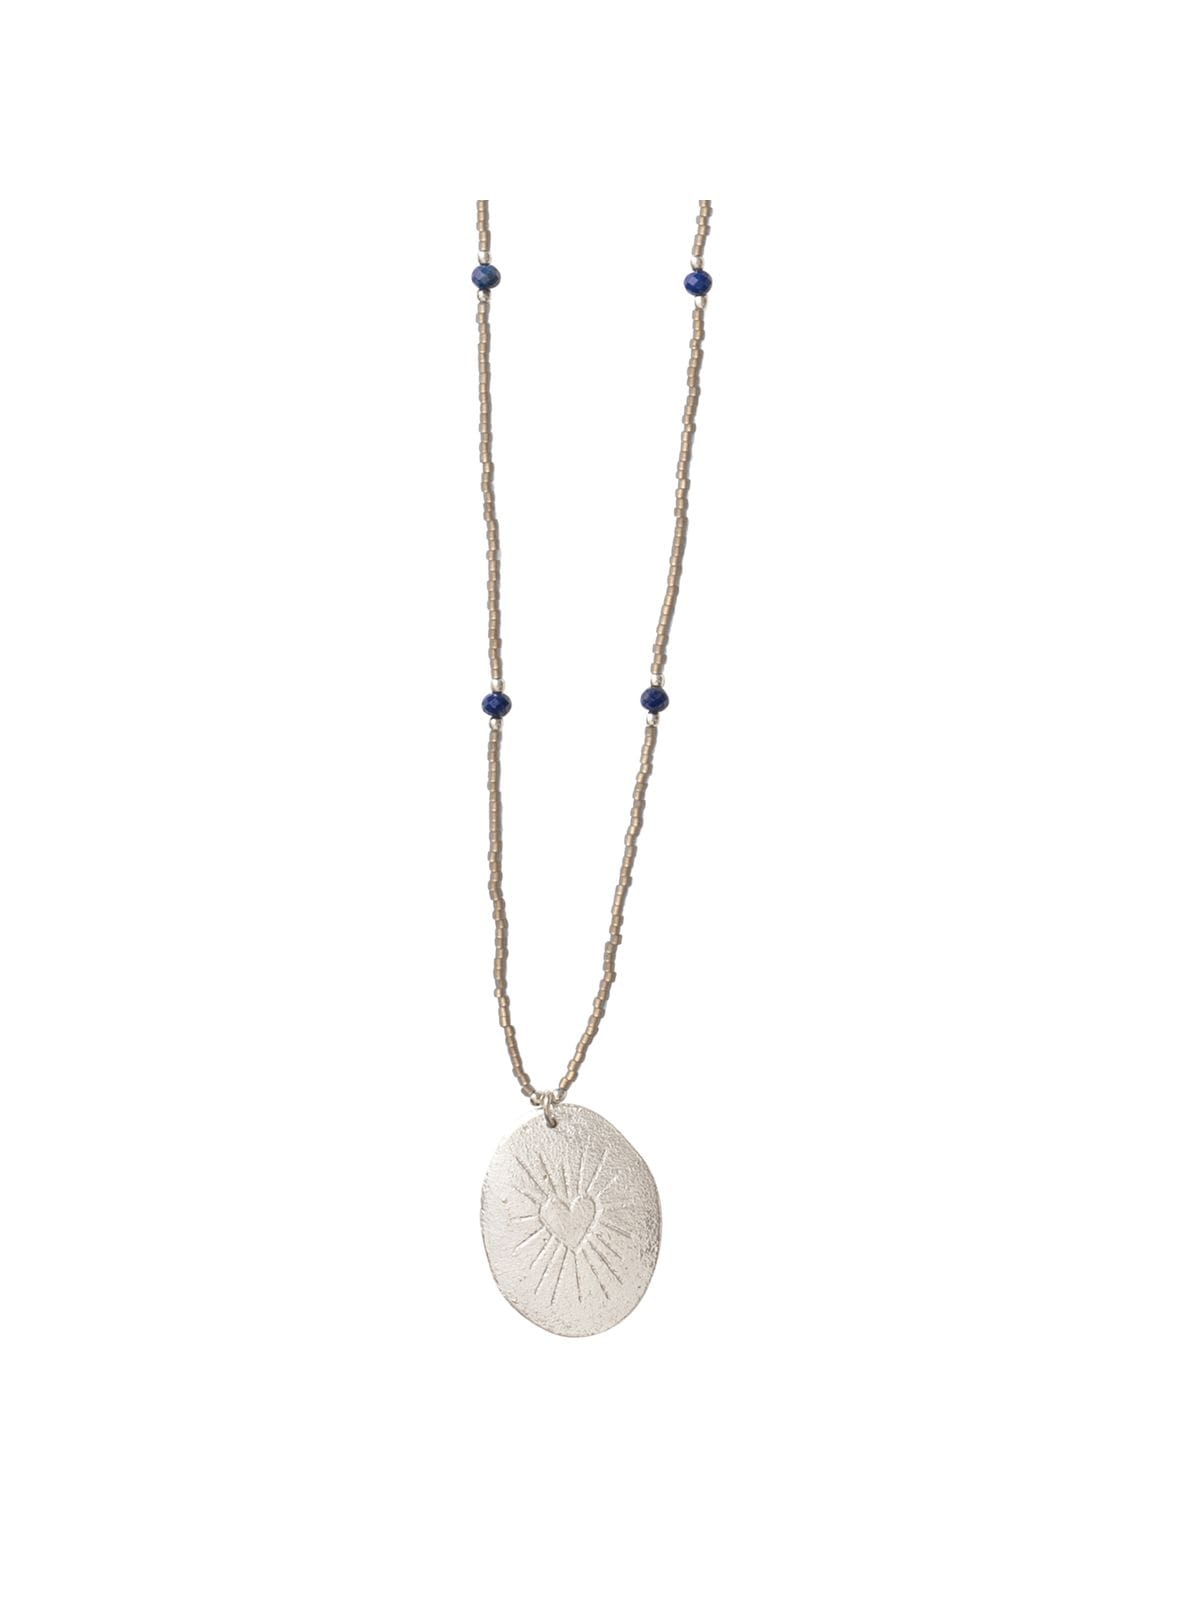 BL25516 - Swing Lapis Lazuli Silver Necklace_1200x1600